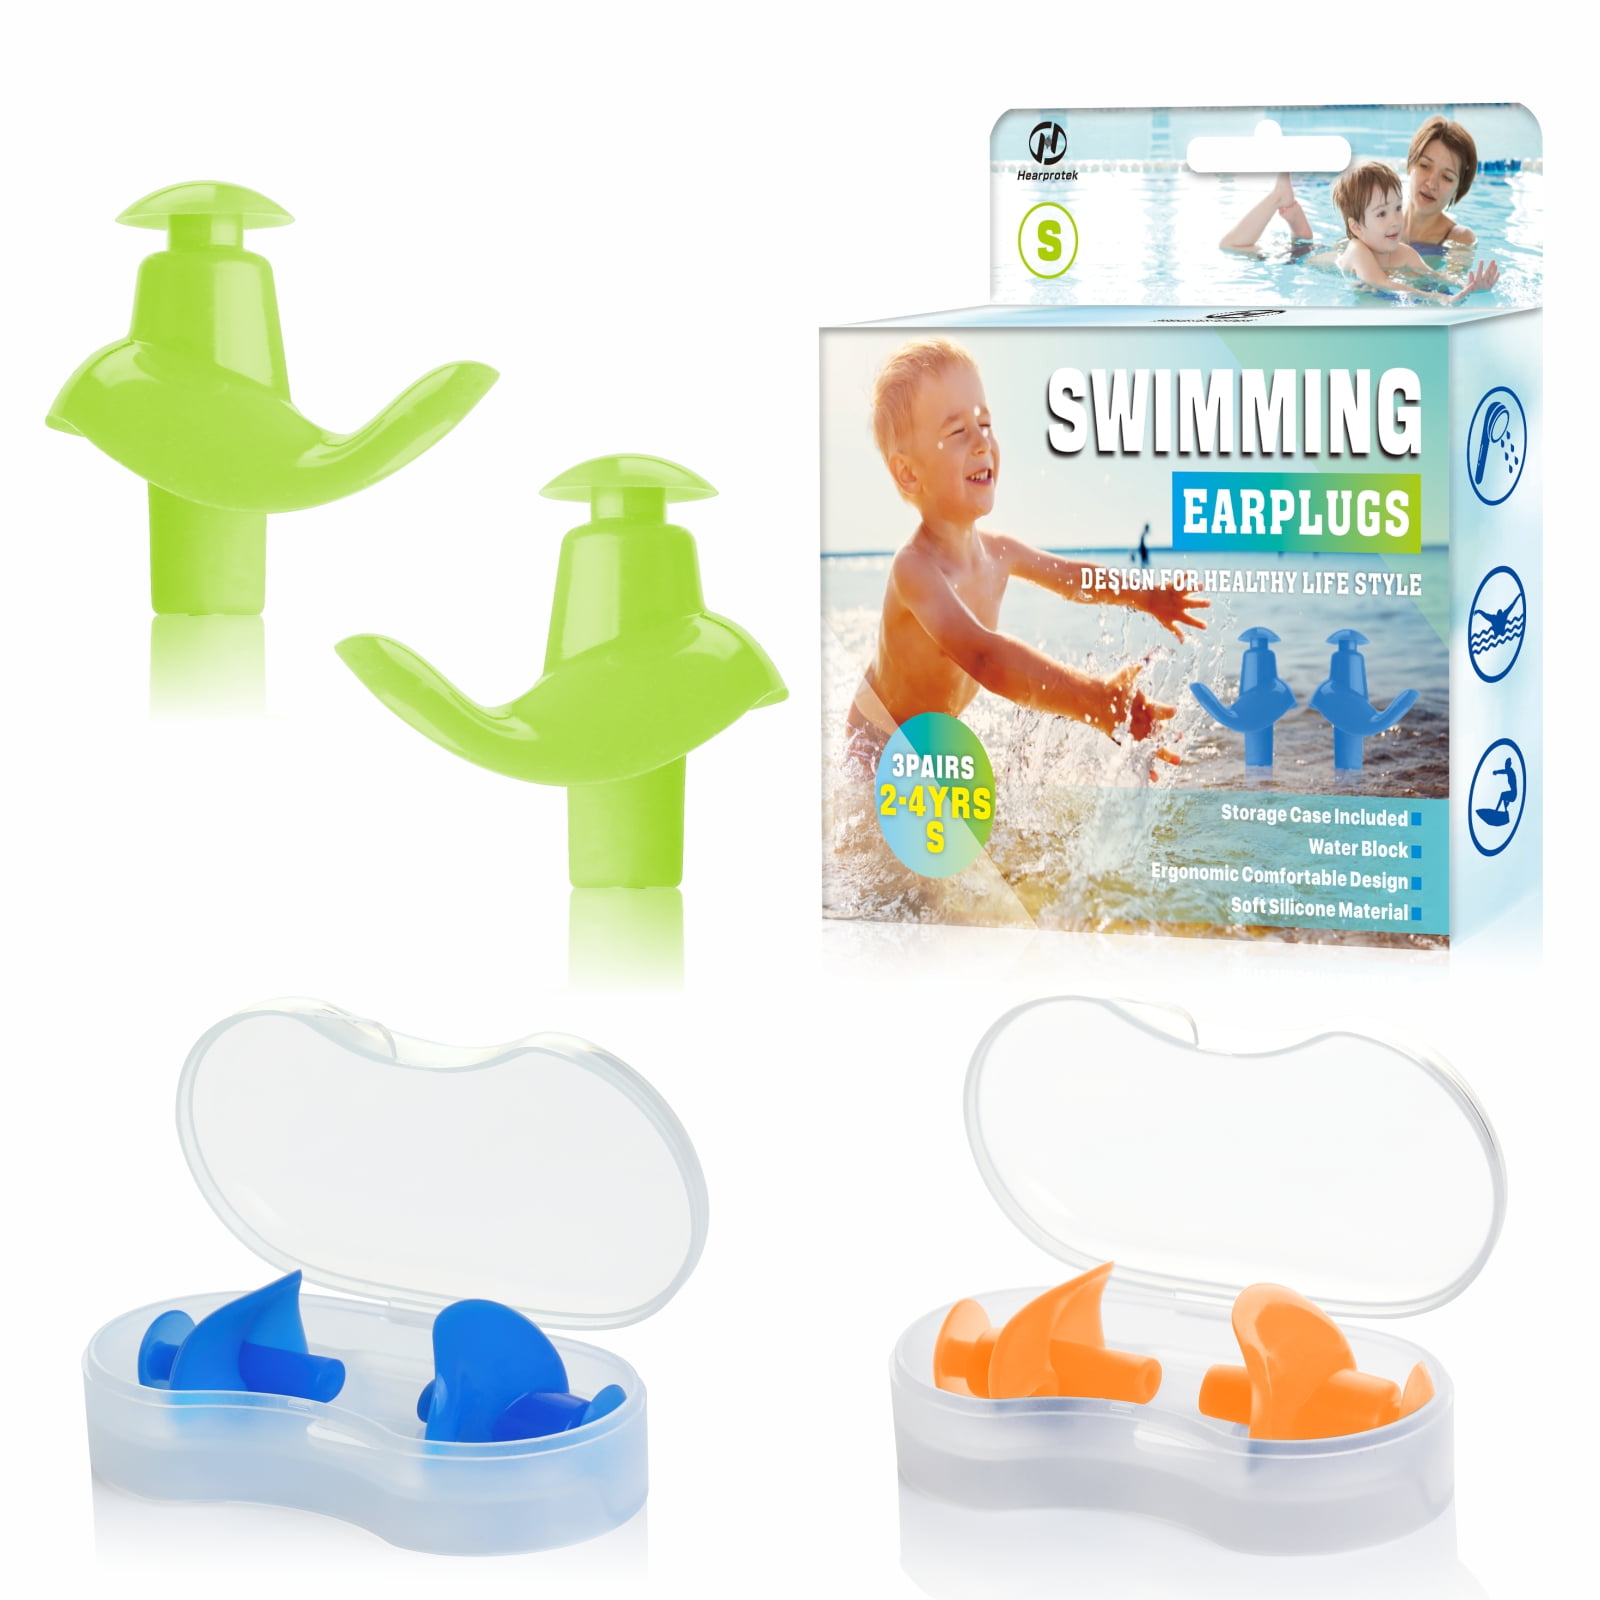 Ewanda store Silicone Swimming Earplugs-10 Pairs Soft and Flexible,Comfortable,Waterproof,Swim Earplugs Ear Plugs for Swimming or Sleeping 